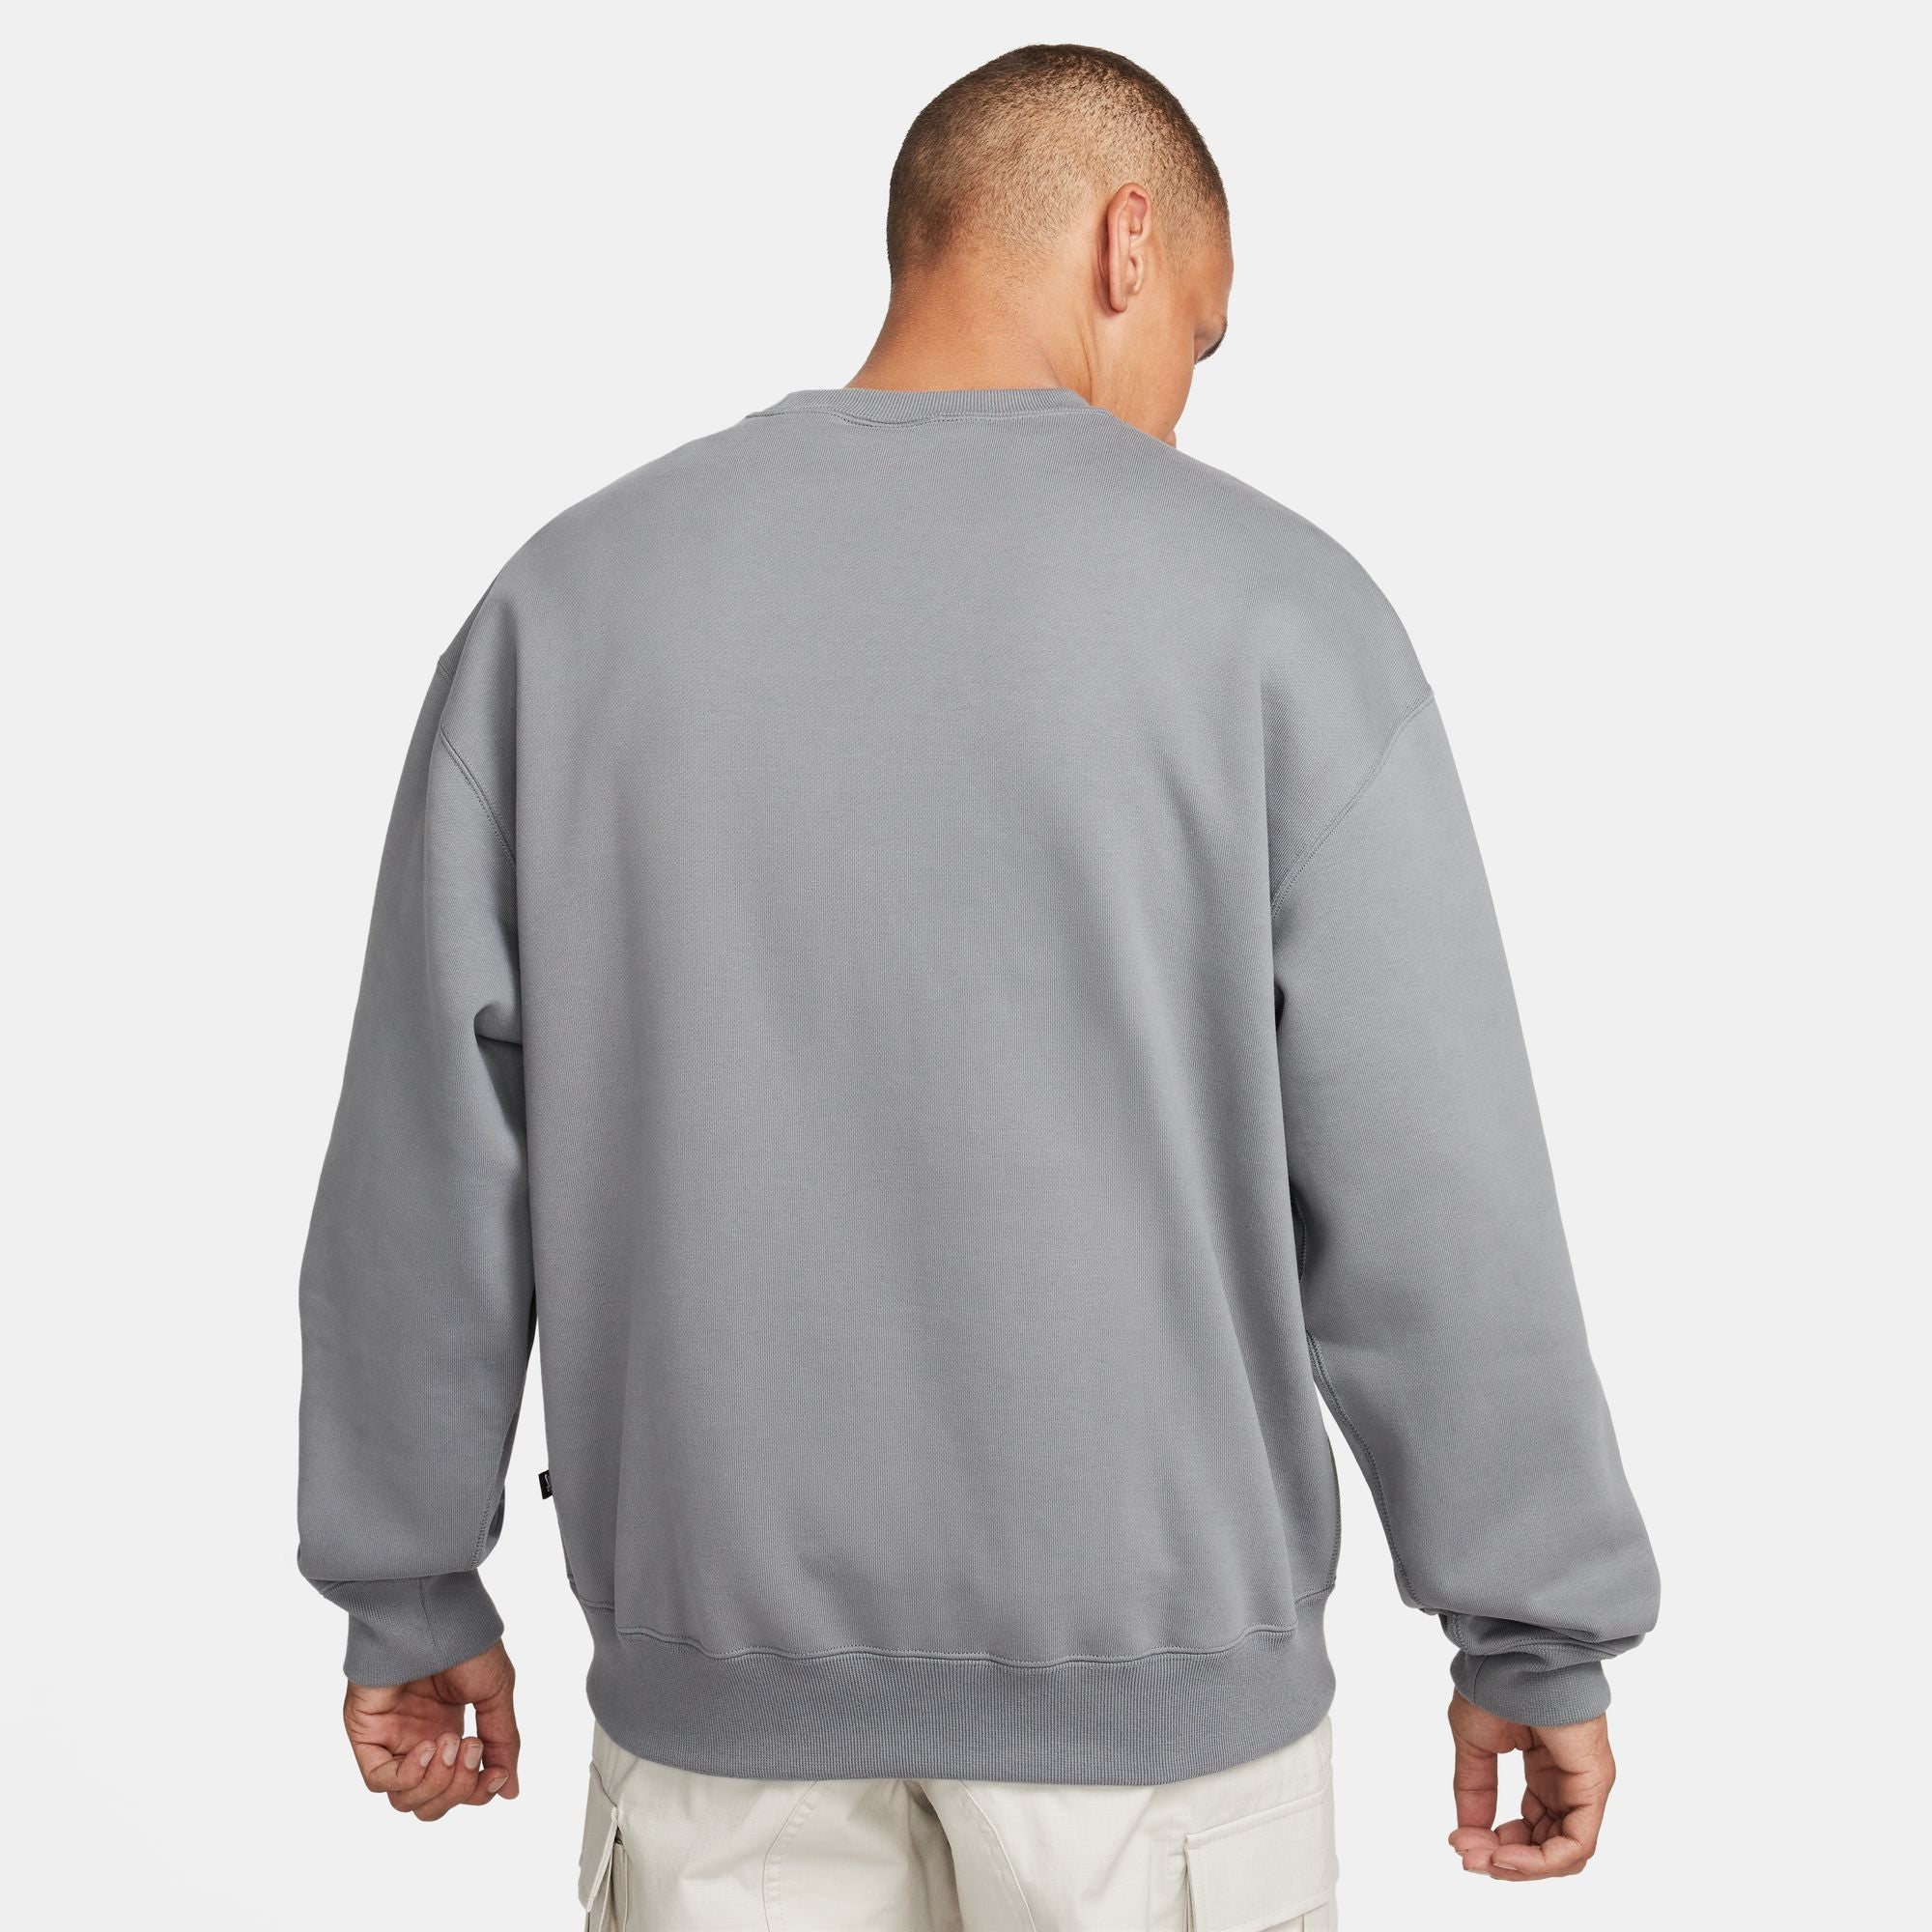 Nike SB Fade Embroidered Crewneck Sweatshirt - Smoke Grey